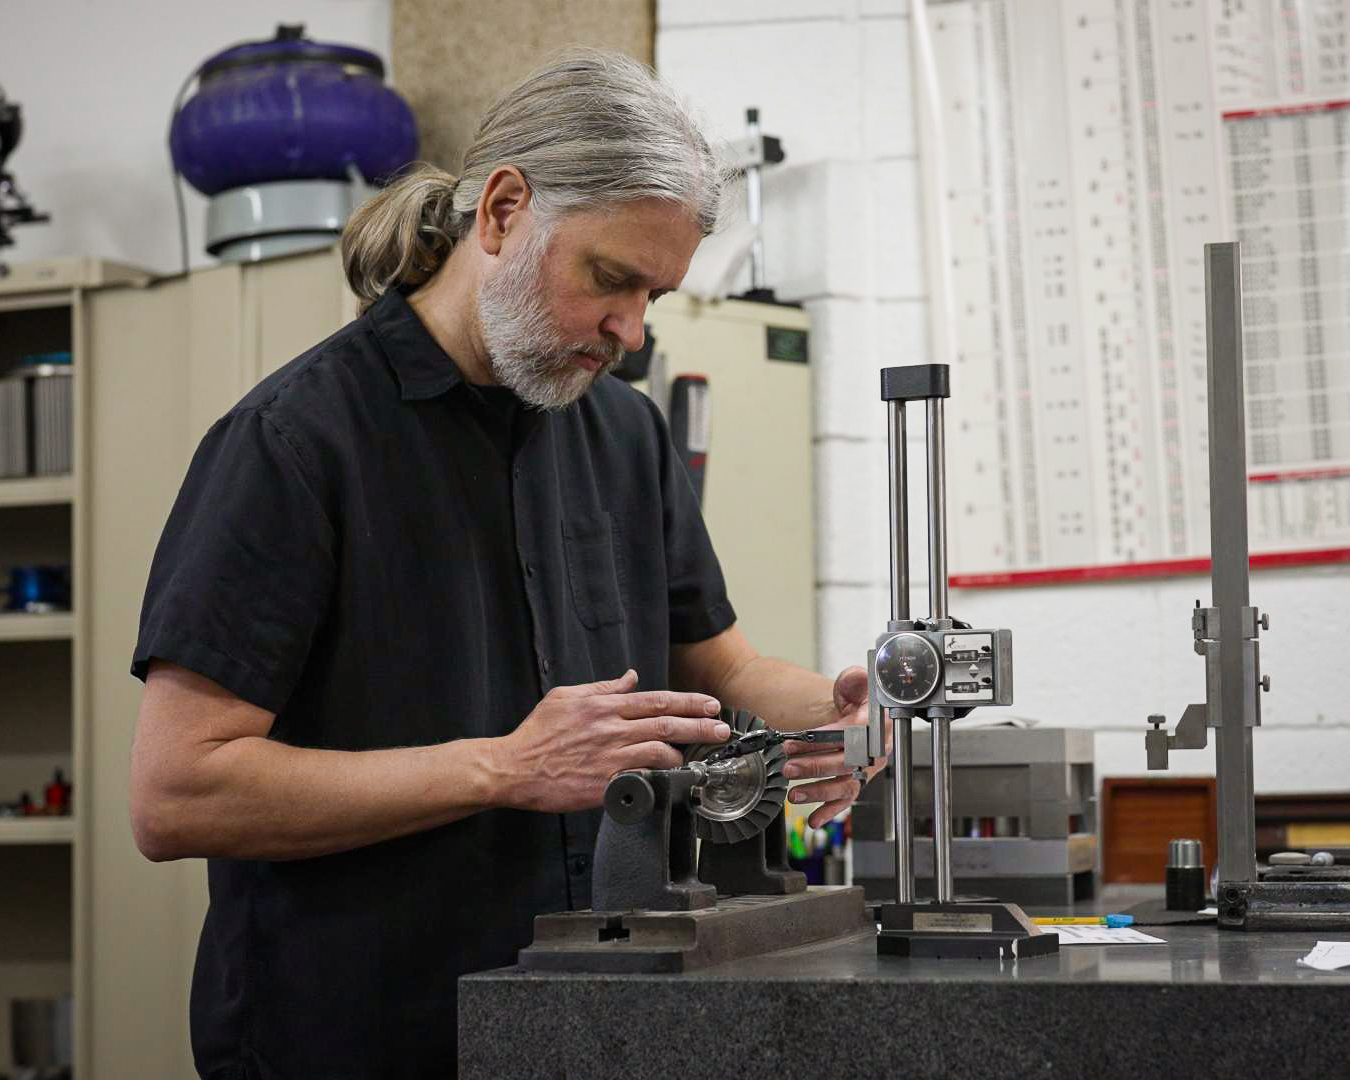 A man in black shirt working on machine.